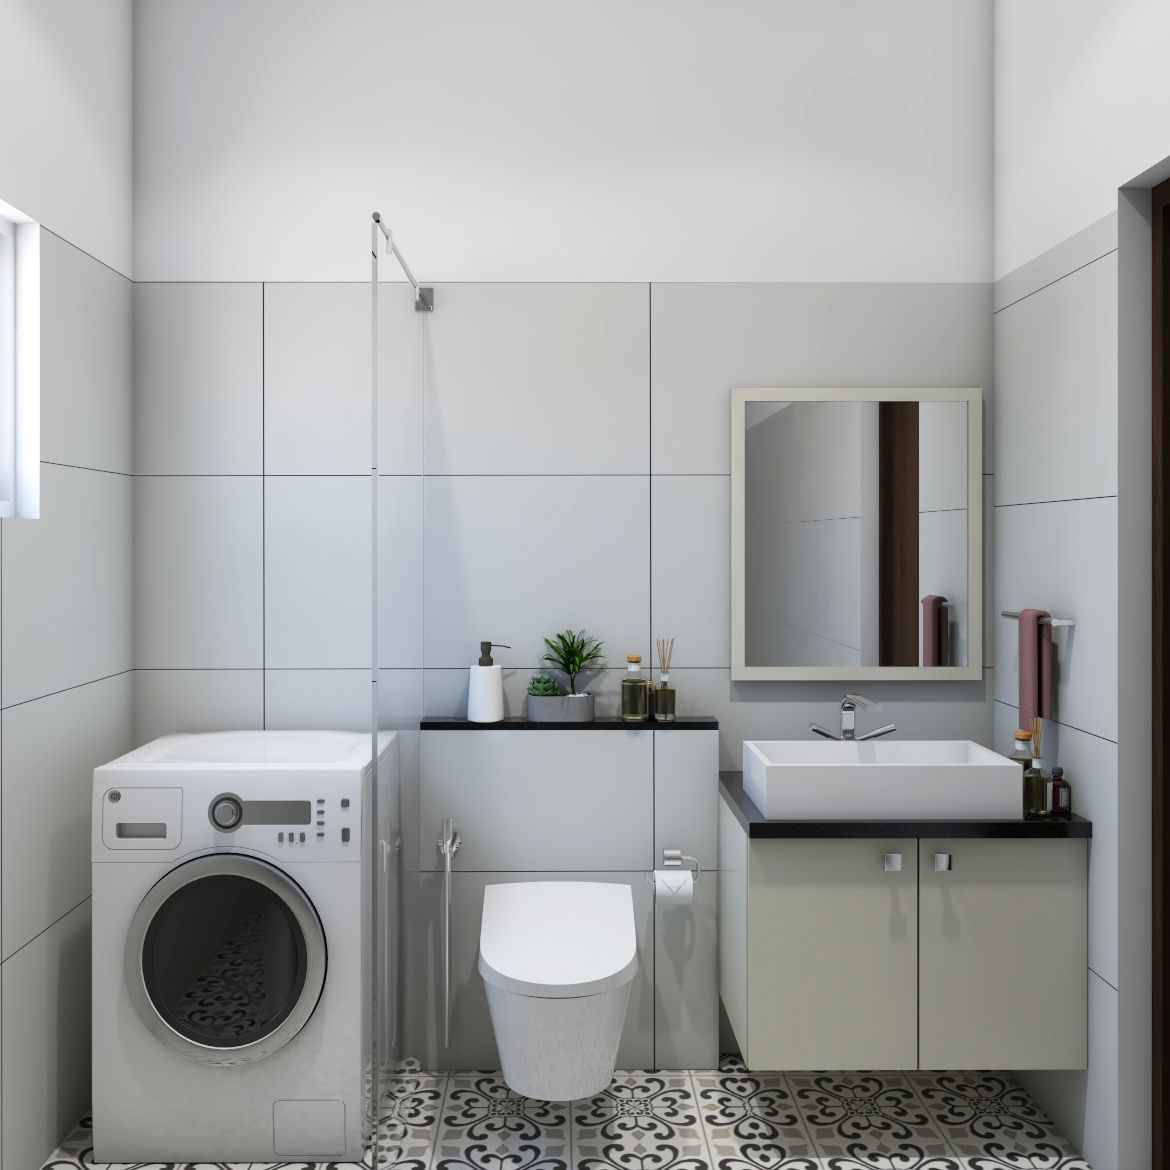 Small Bathroom Idea With Grey Wall Tiles